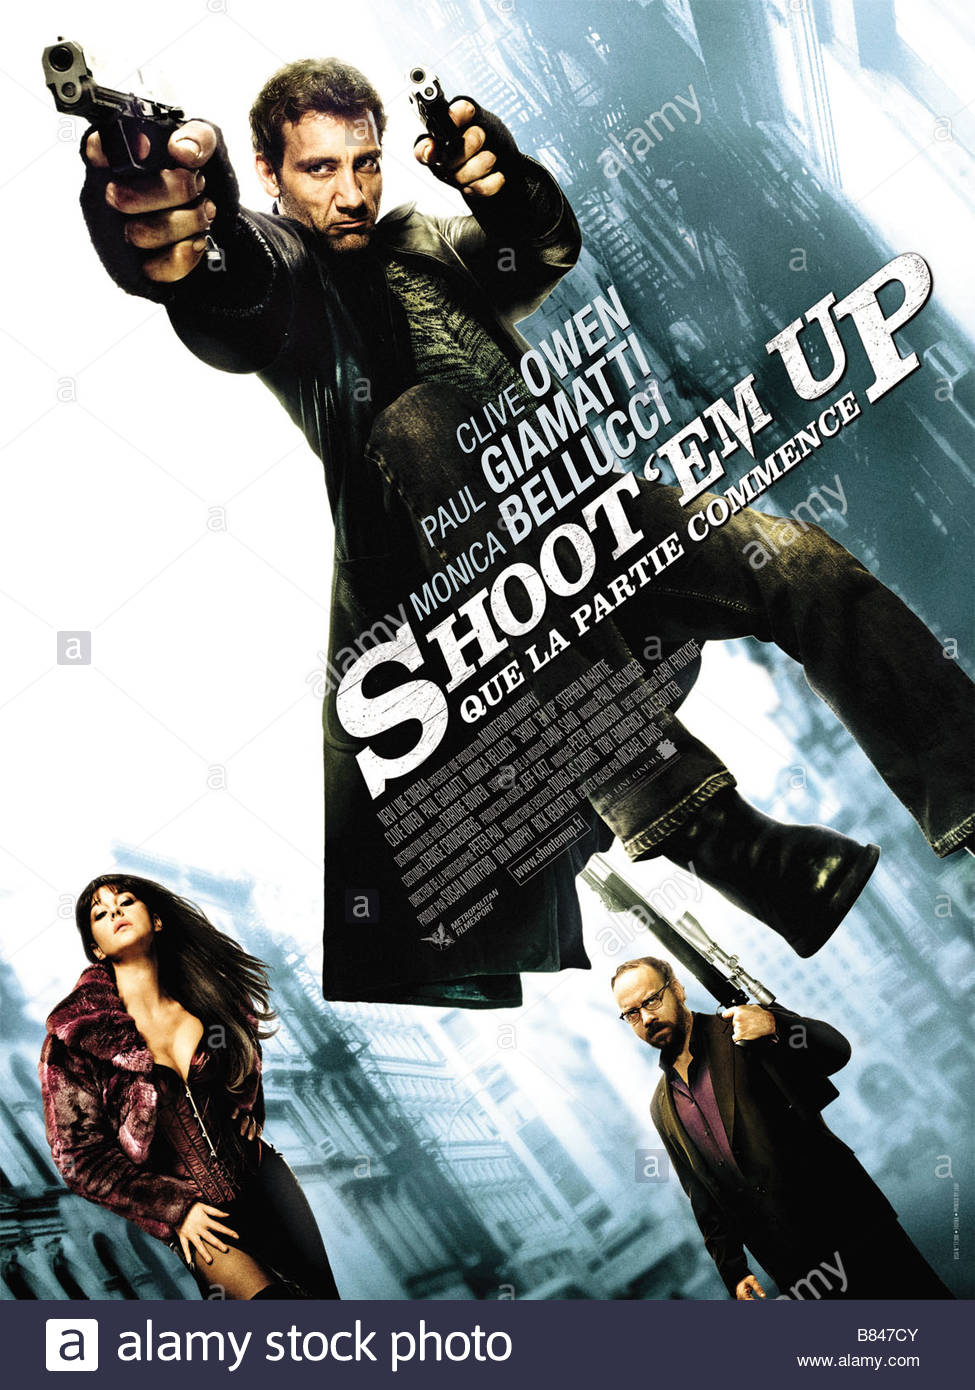 Shoot 'Em Up Main Poster